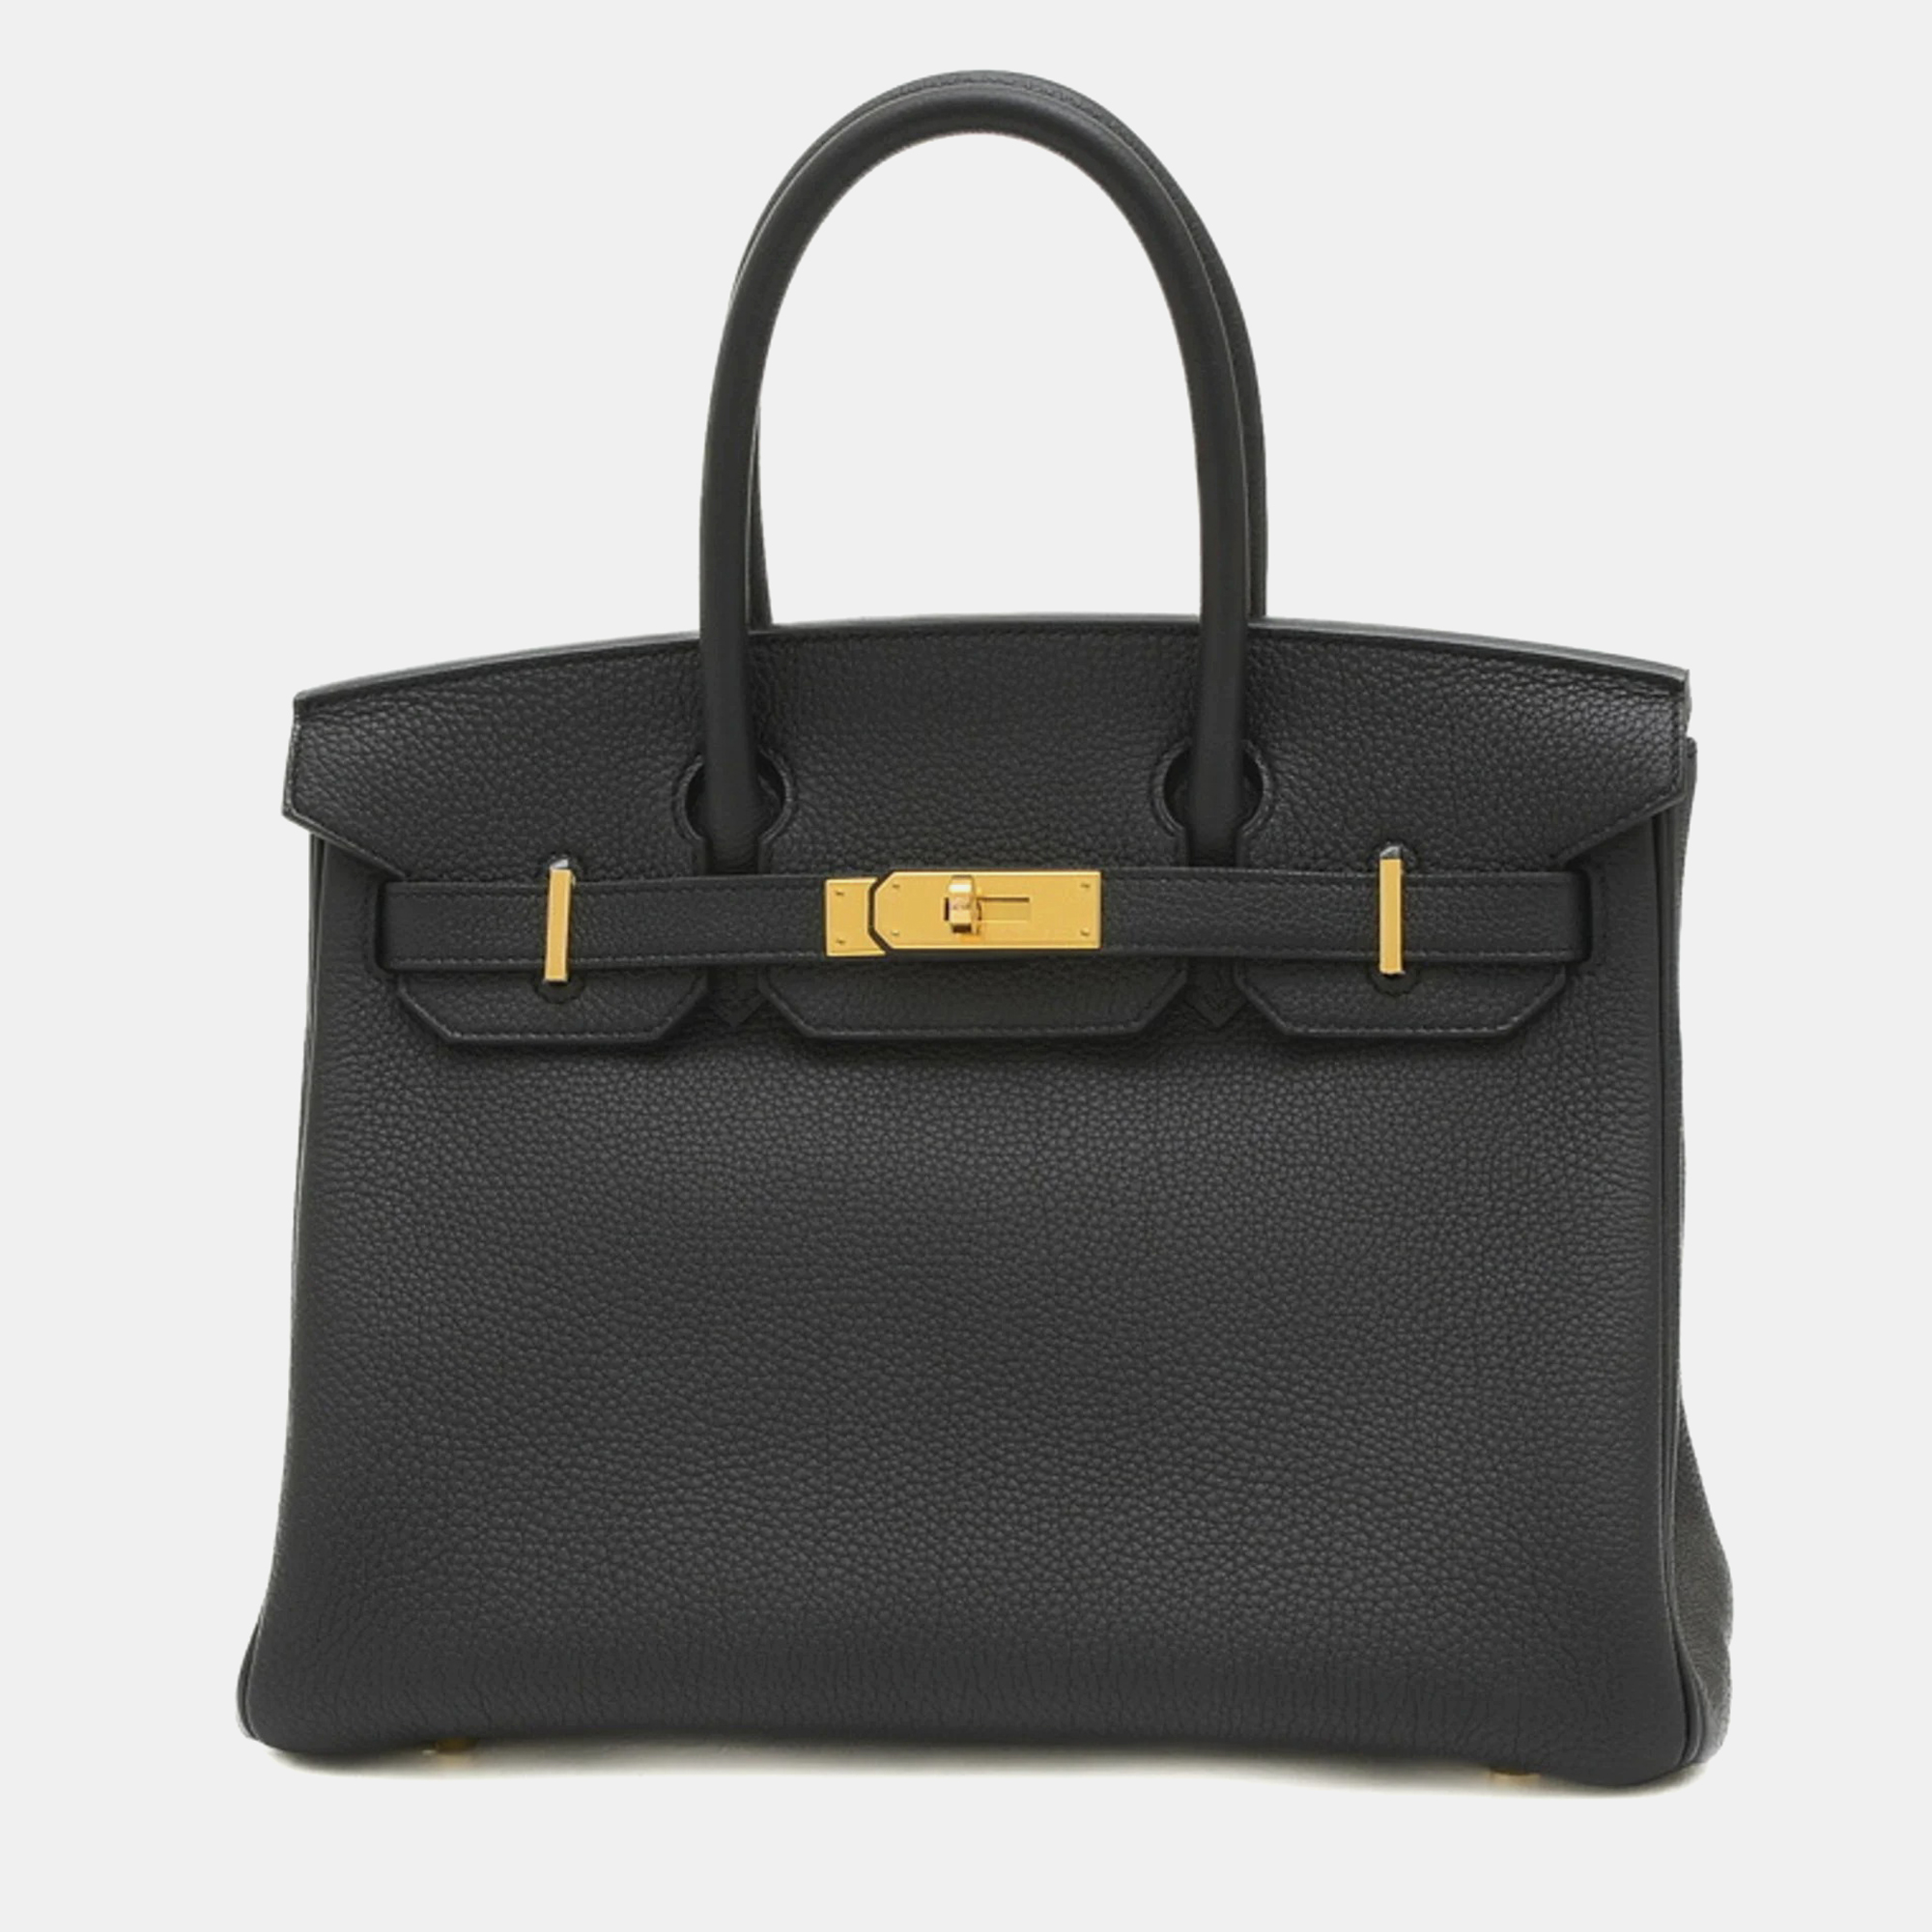 Hermes black togo birkin 30 handbag